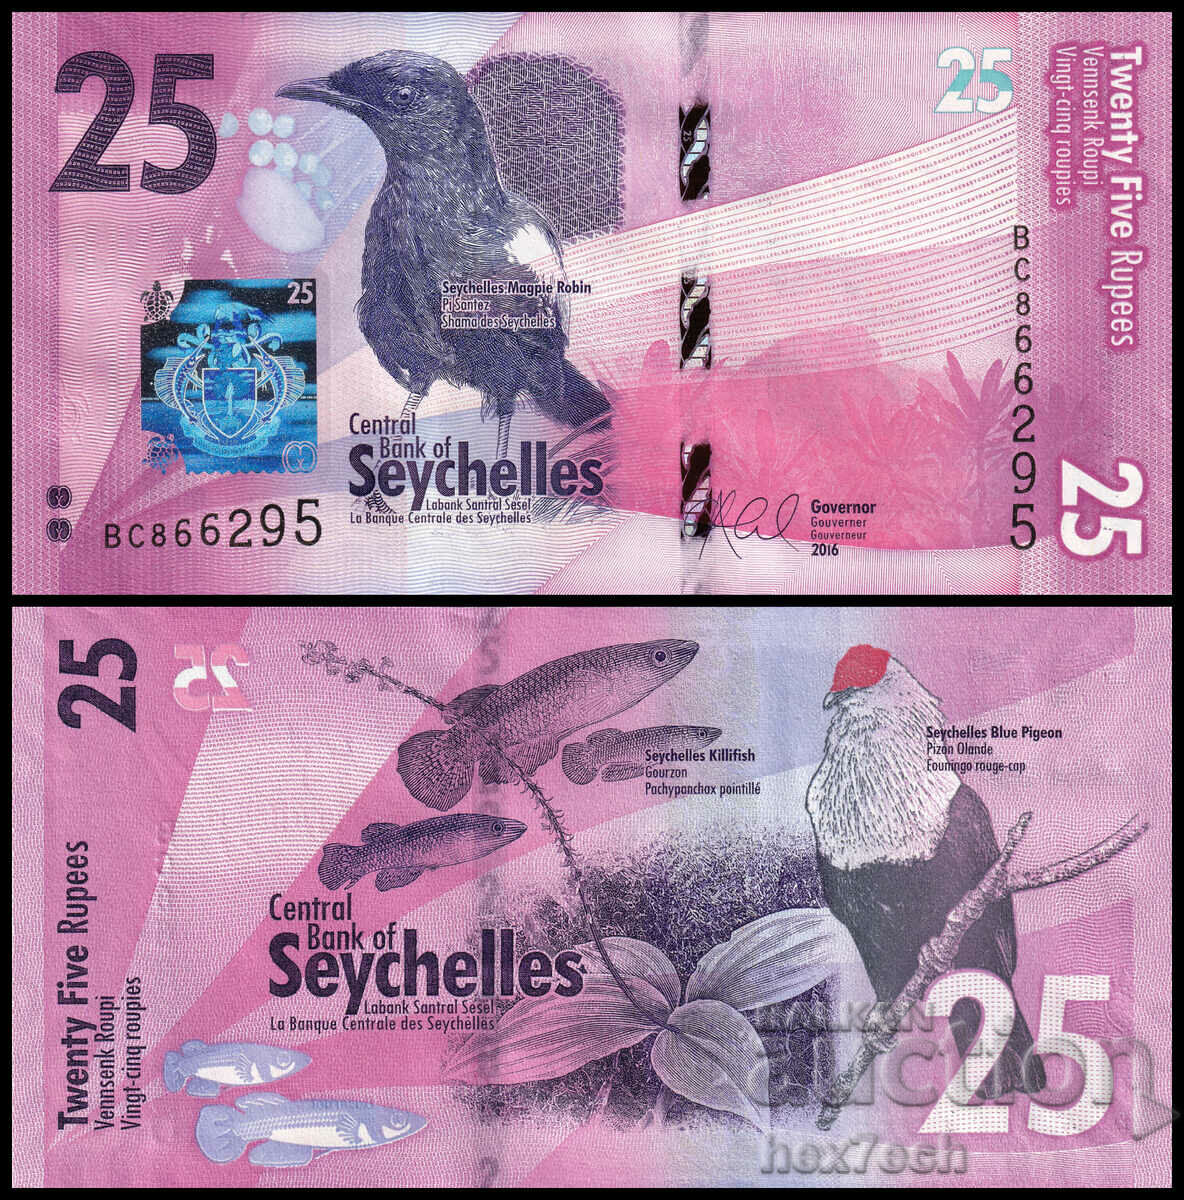 ❤️ ⭐ Seychelles 2016 25 Rupees UNC new ⭐ ❤️